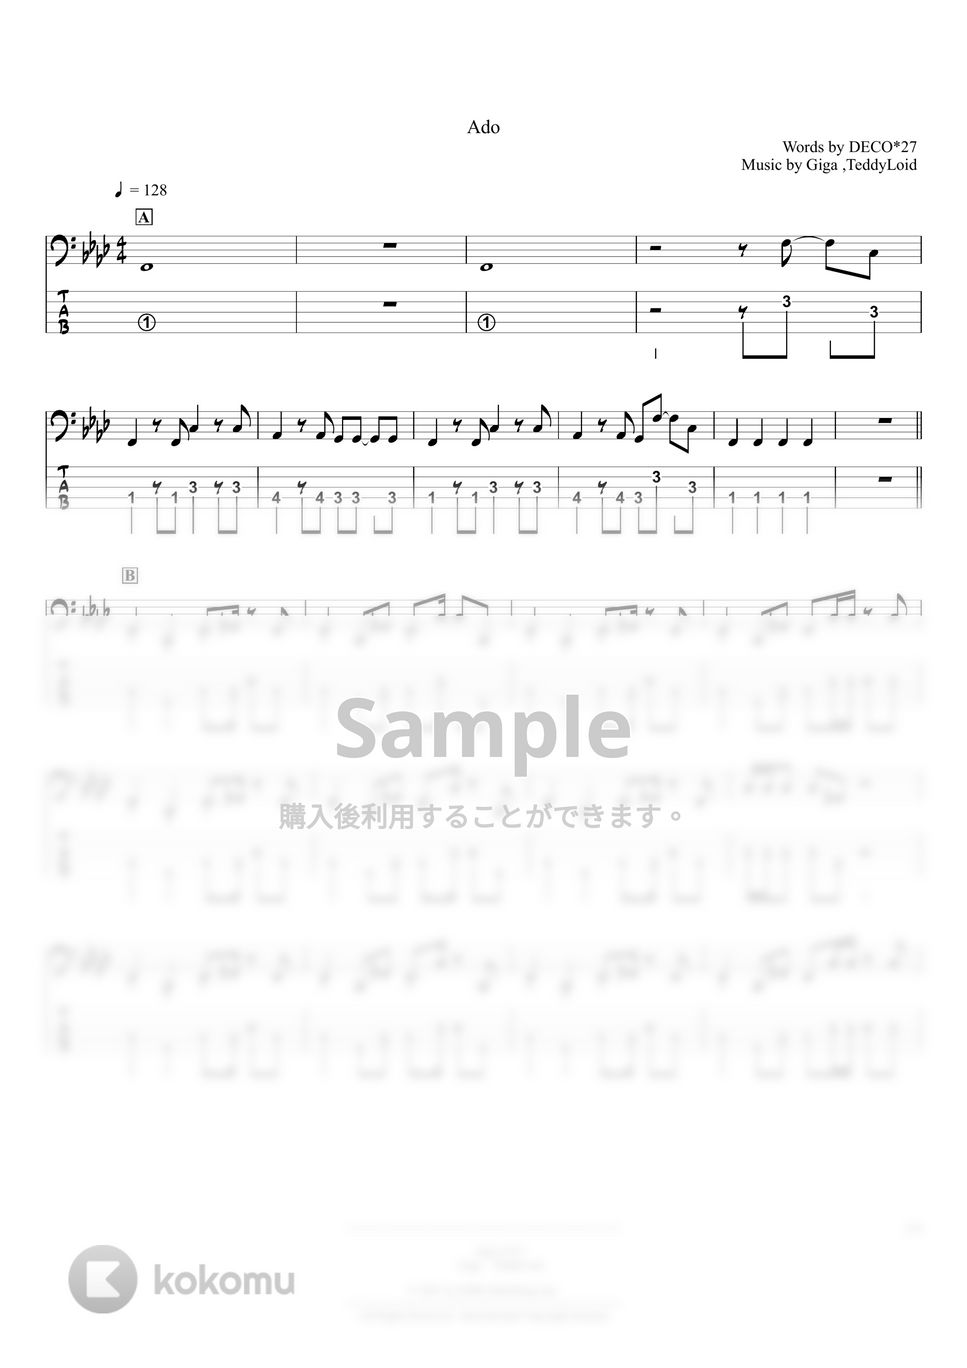 Ado - 踊 (ベースTAB譜☆5弦ベース対応) by swbass